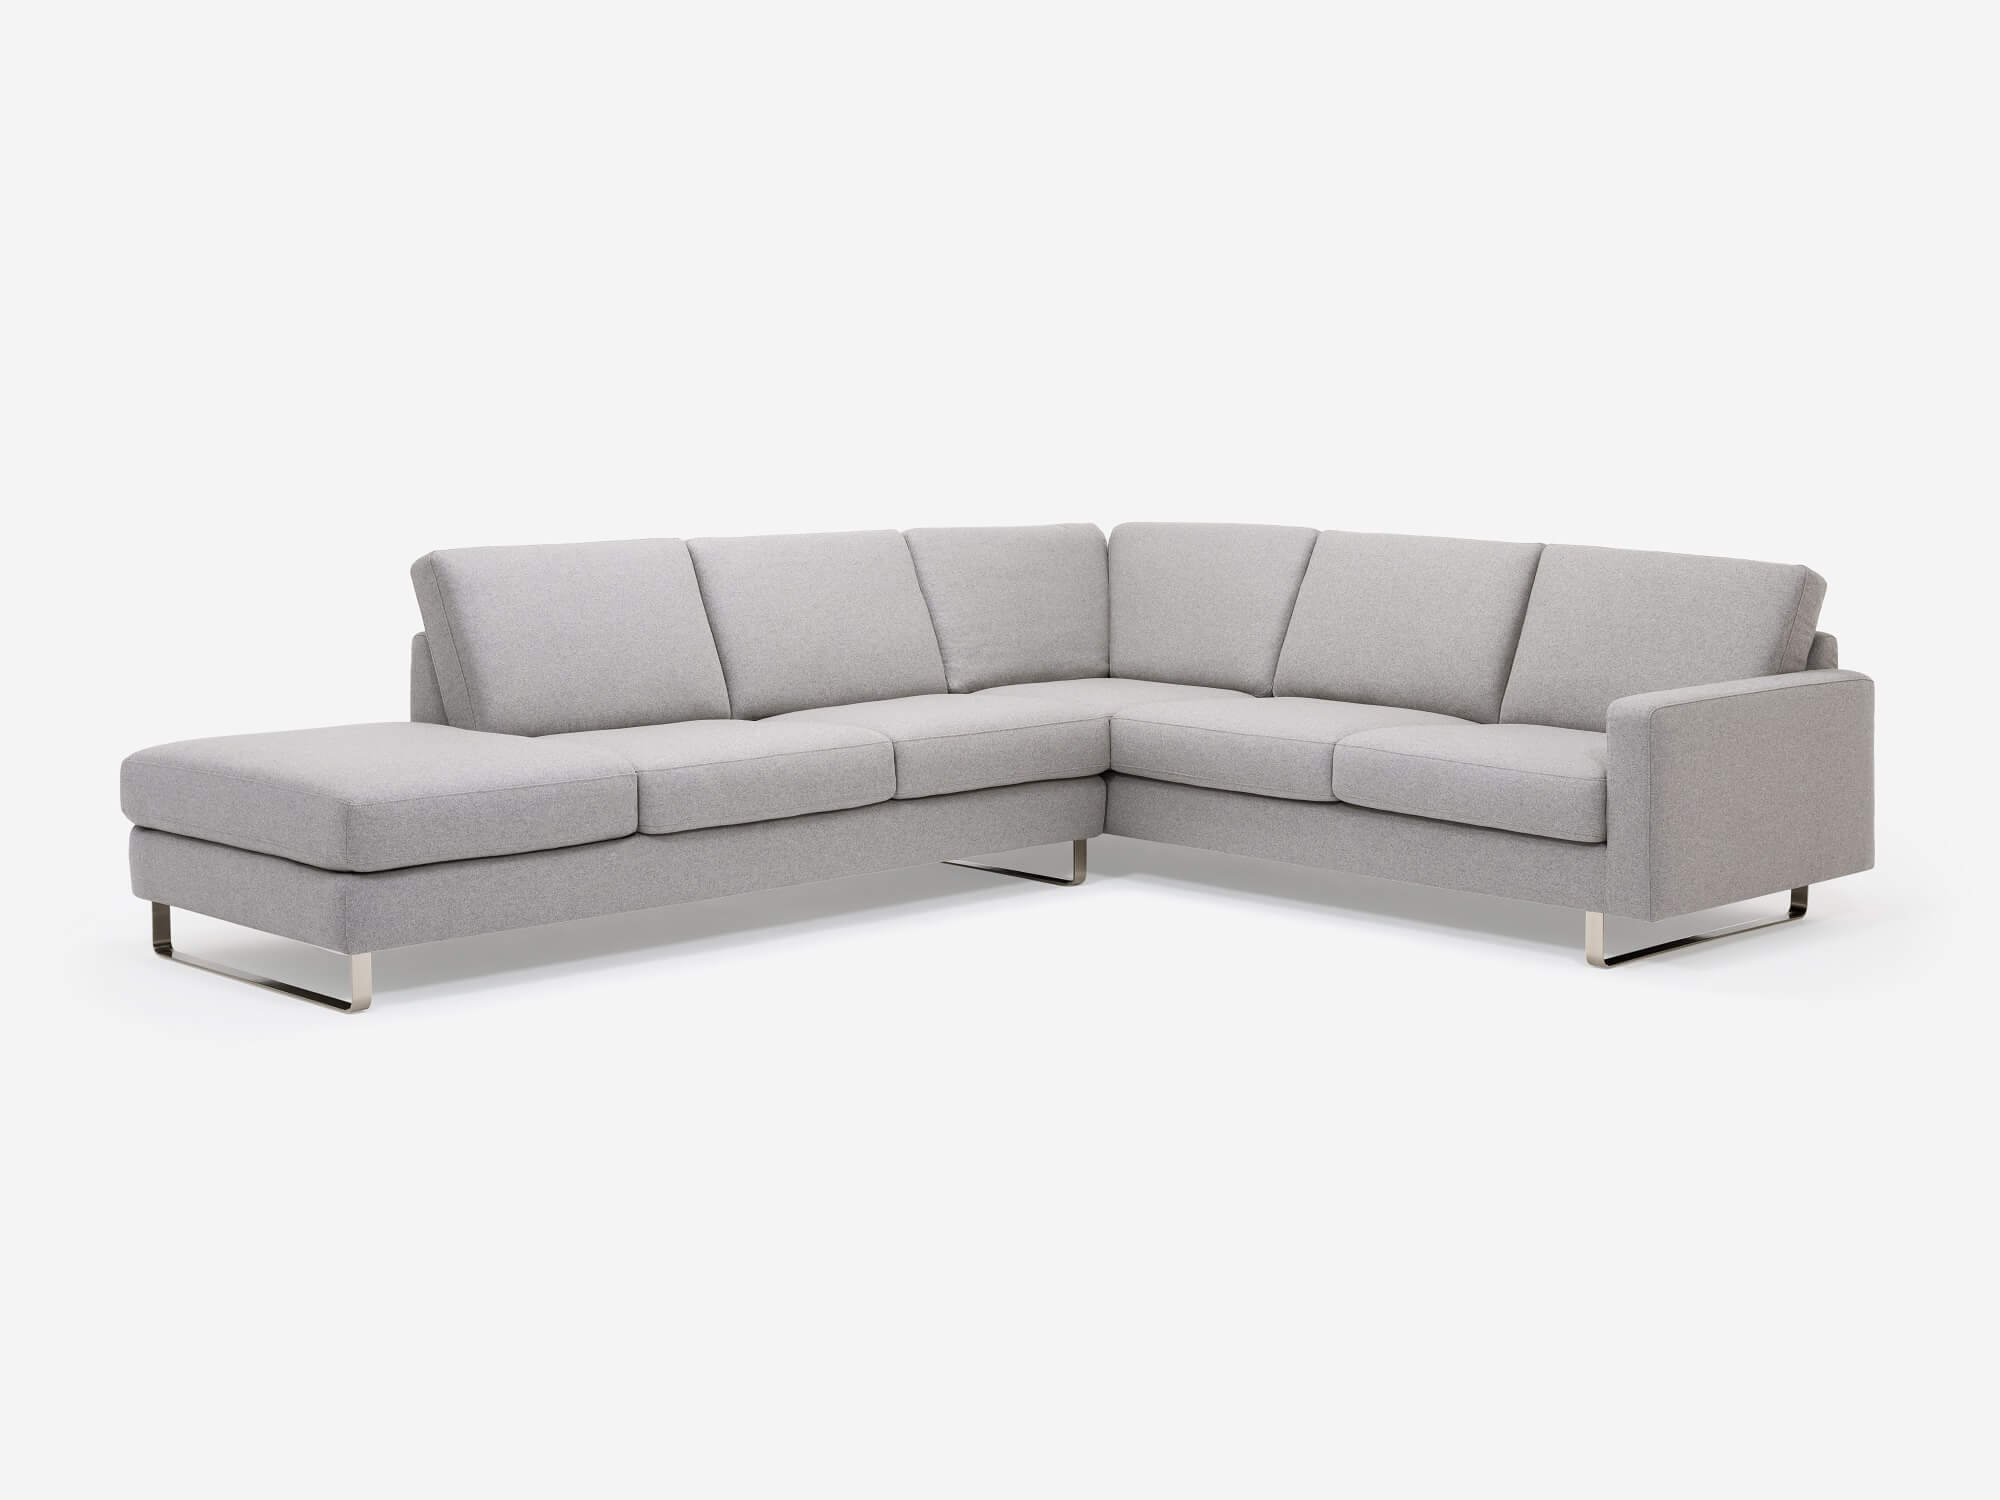 Oskar Large Sectional Sofa with Optional Headrests | EQ3